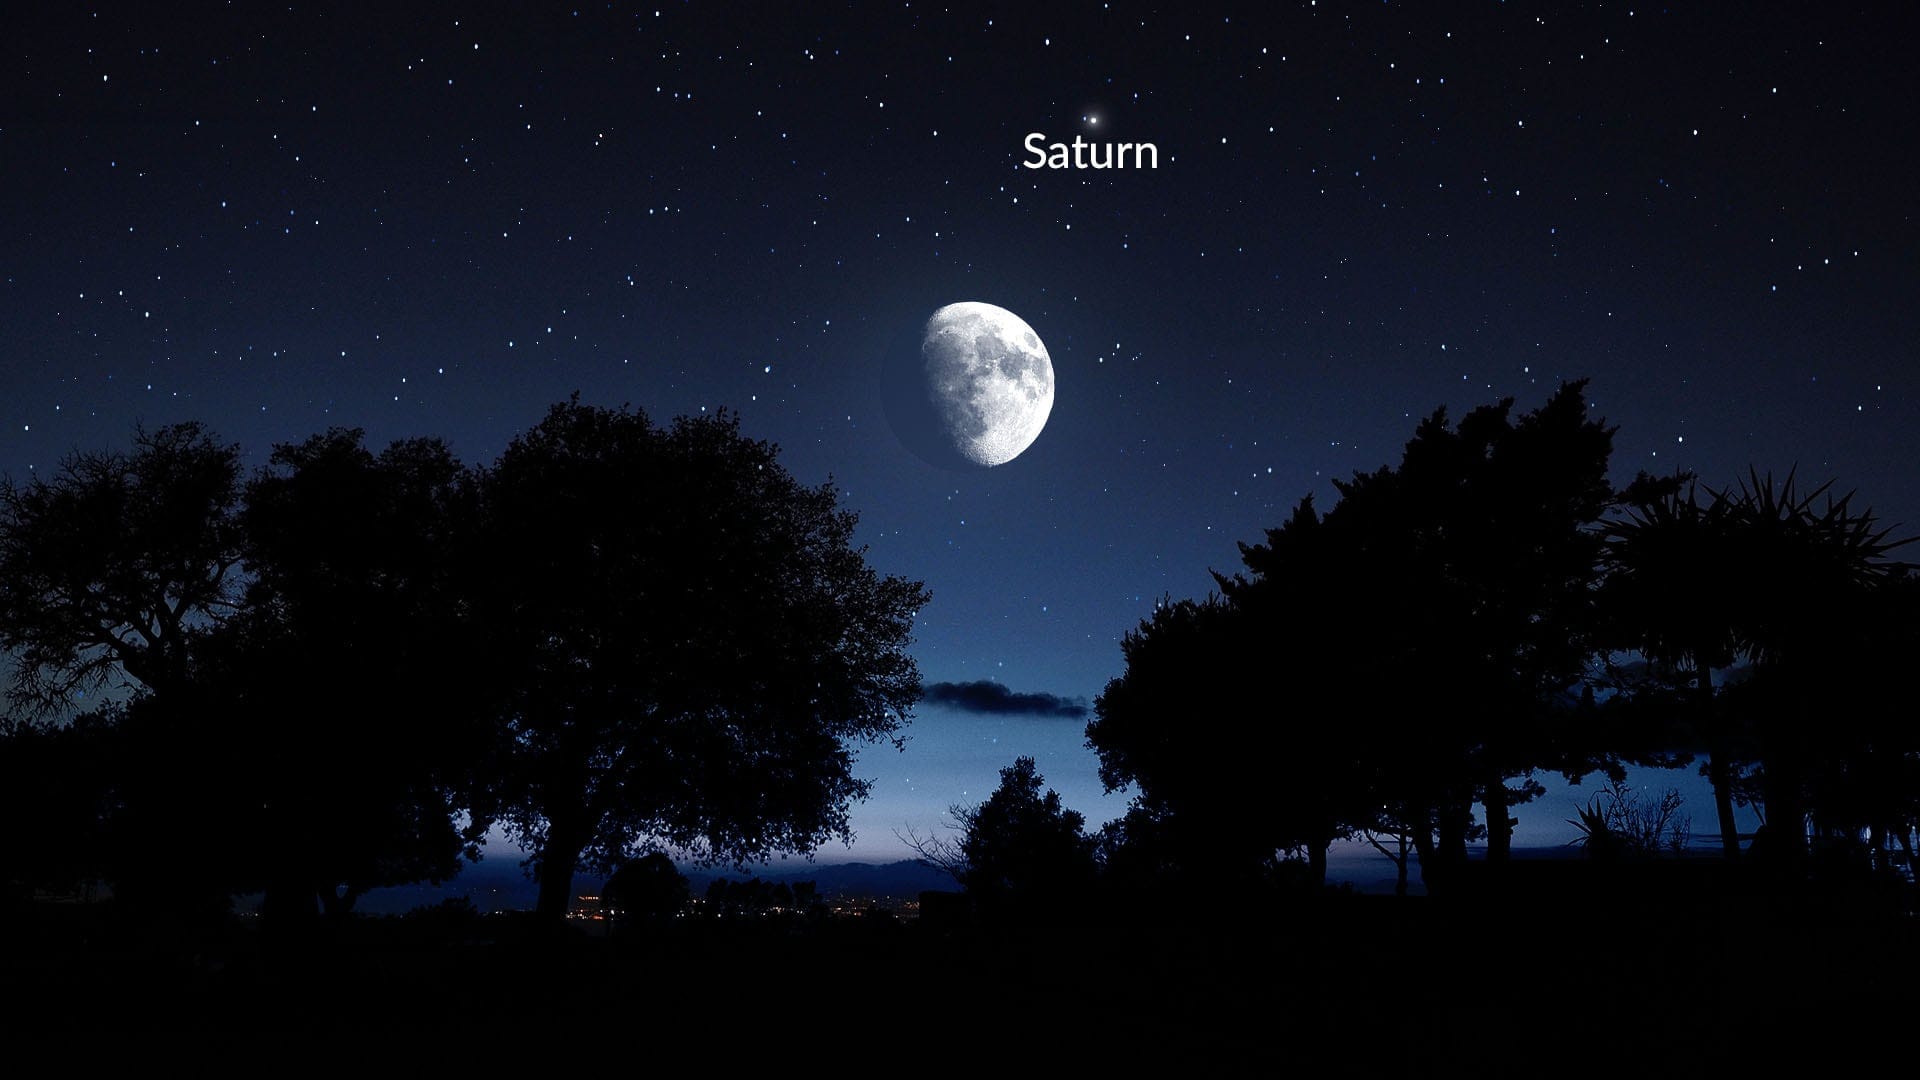 Moon-Saturn conjunction in October 2022